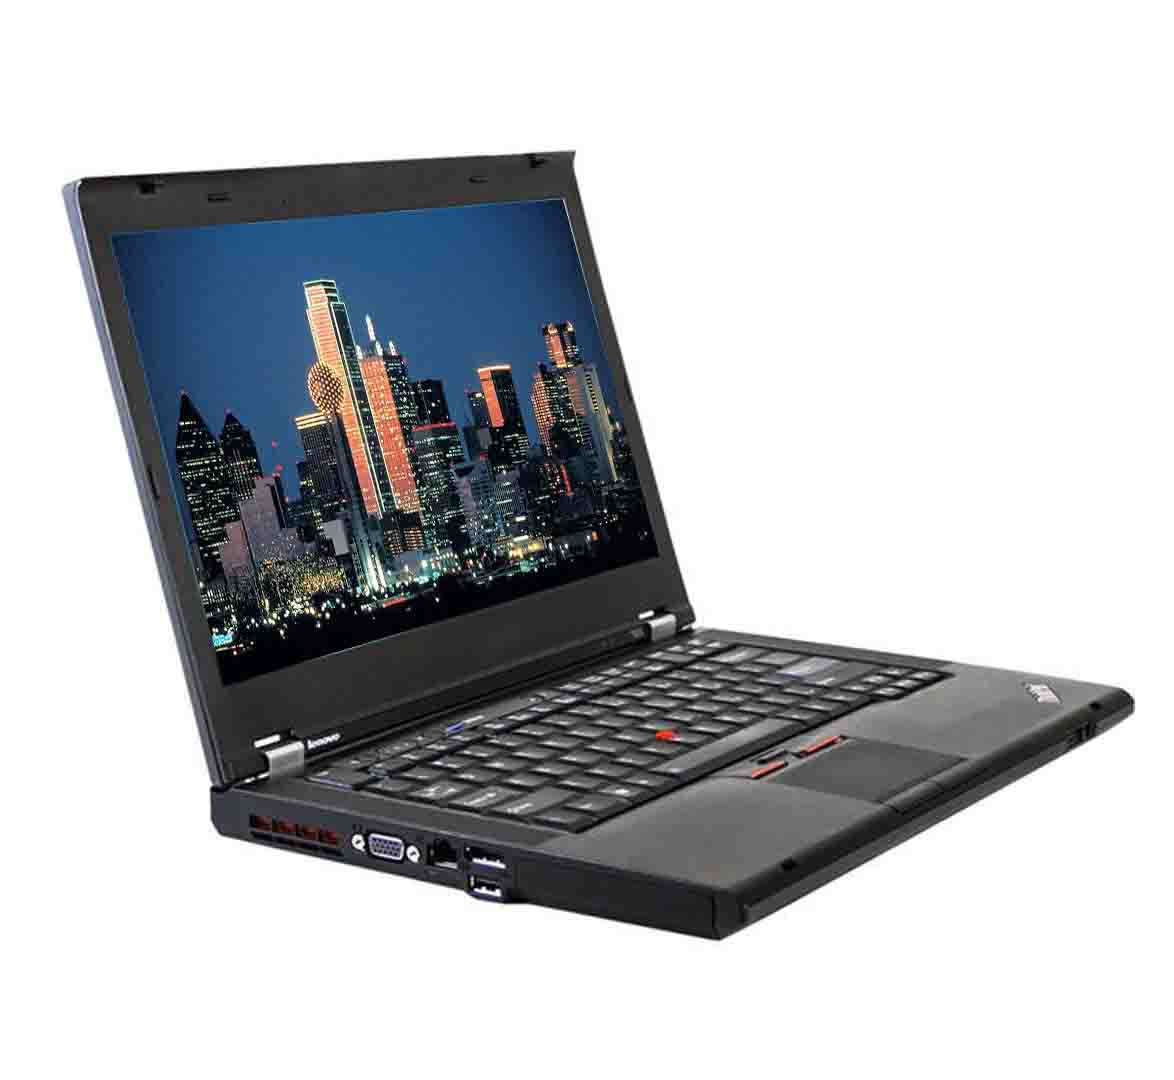 Lenovo ThinkPad T420 Business Laptop, Intel Core i5-2nd Gen CPU, 4GB RAM, 320GB HDD, 14.1 inch Display, Windows 10 Pro, Refurbished Laptop